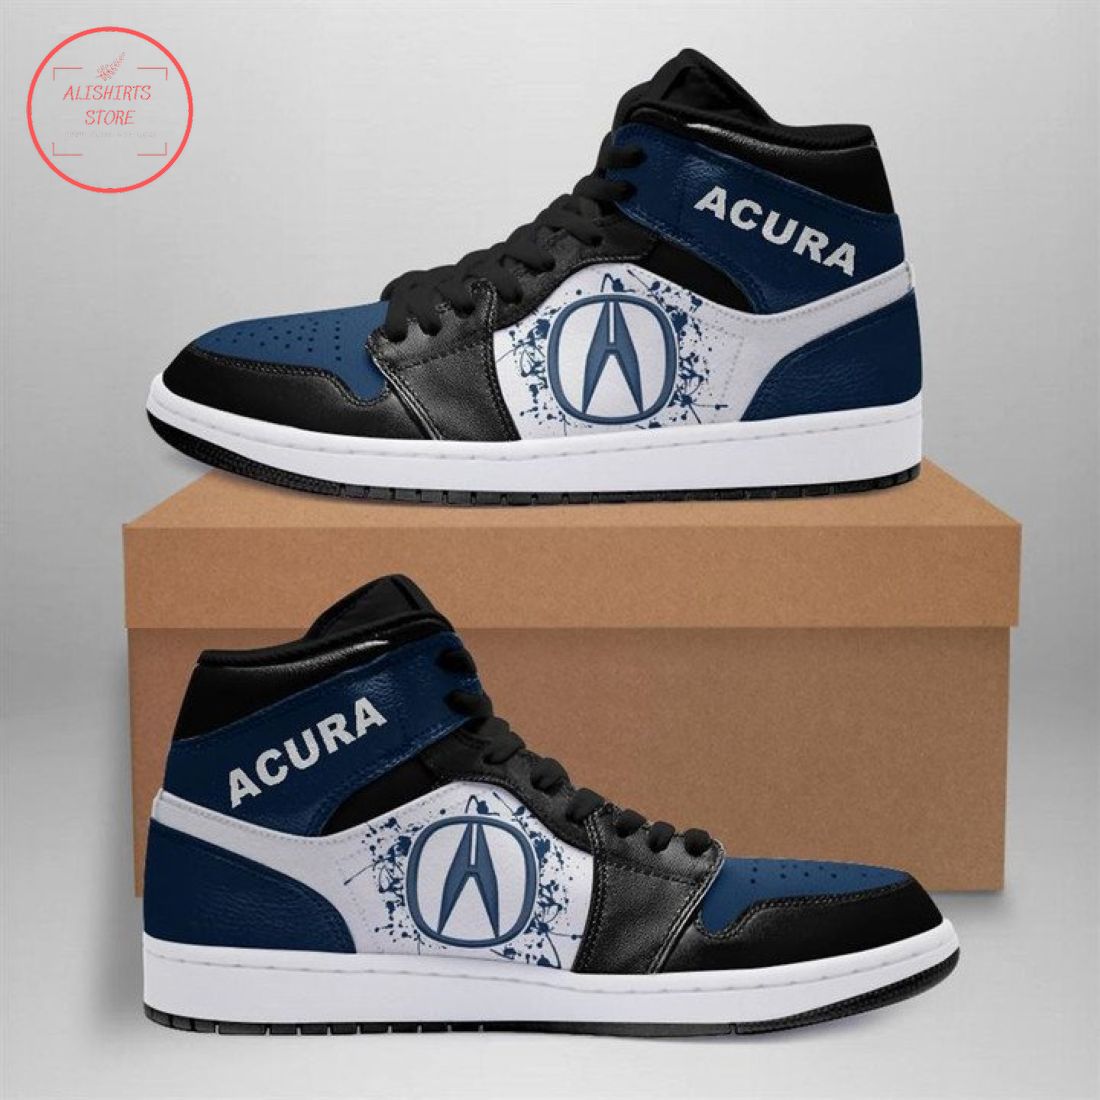 Acura Automobile Car Jordan 1 High Top Sneakers